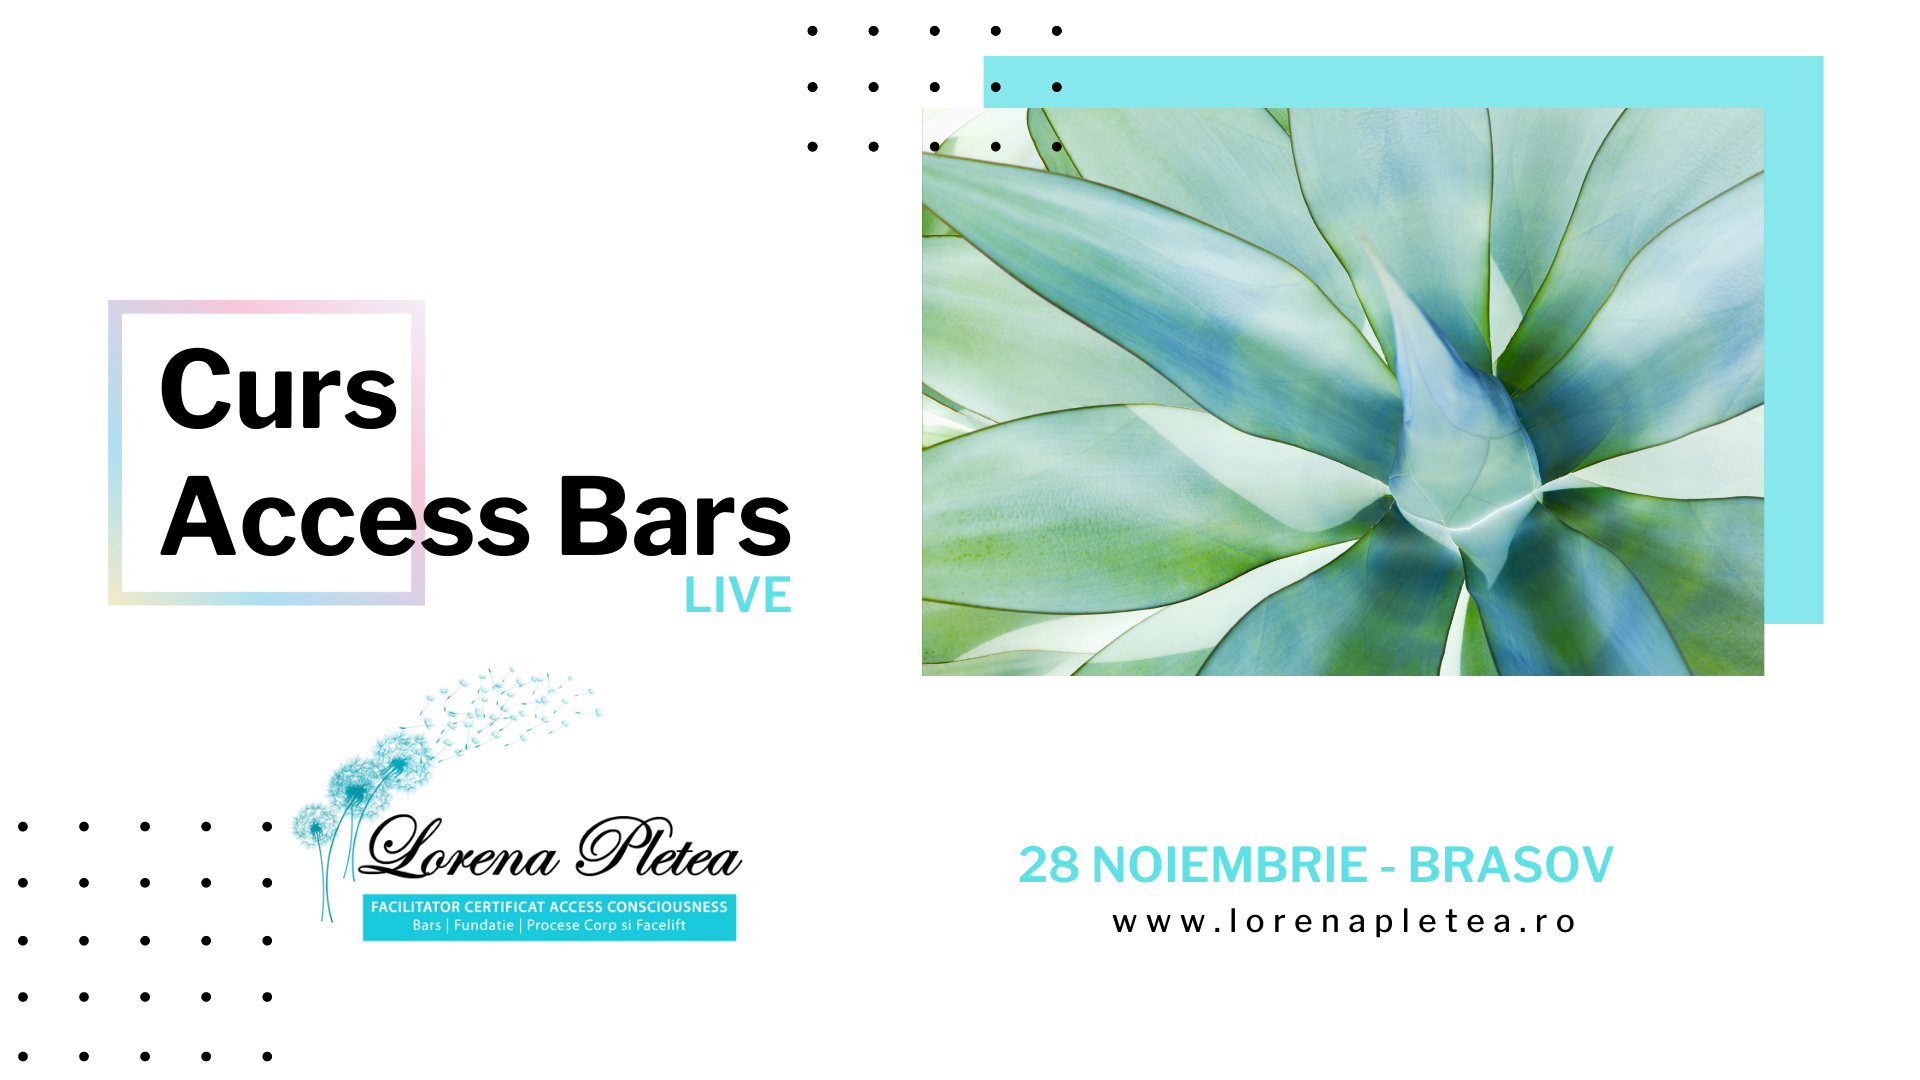 Curs Access Bars – 28 Noiembrie, Brasov